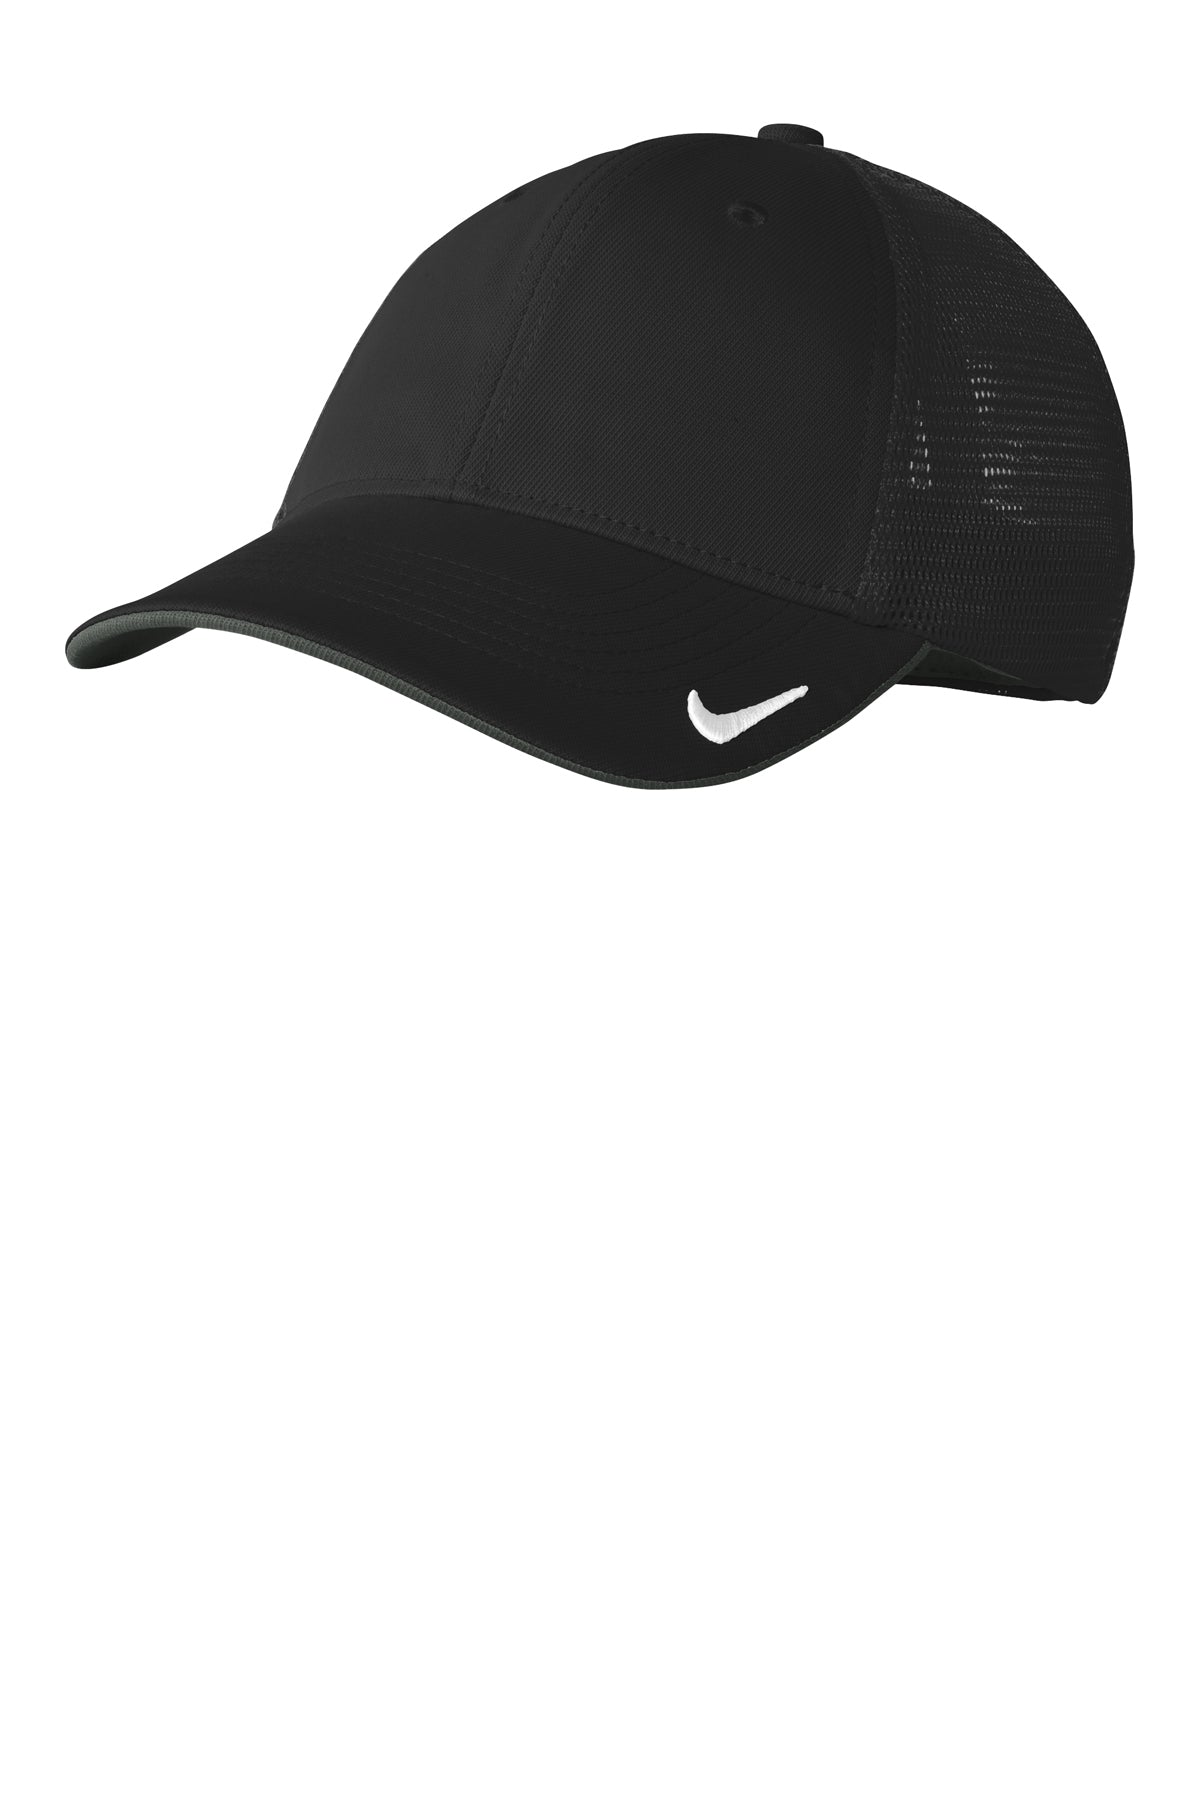 NKFB6448 Nike Stretch-to-Fit Mesh Back Cap